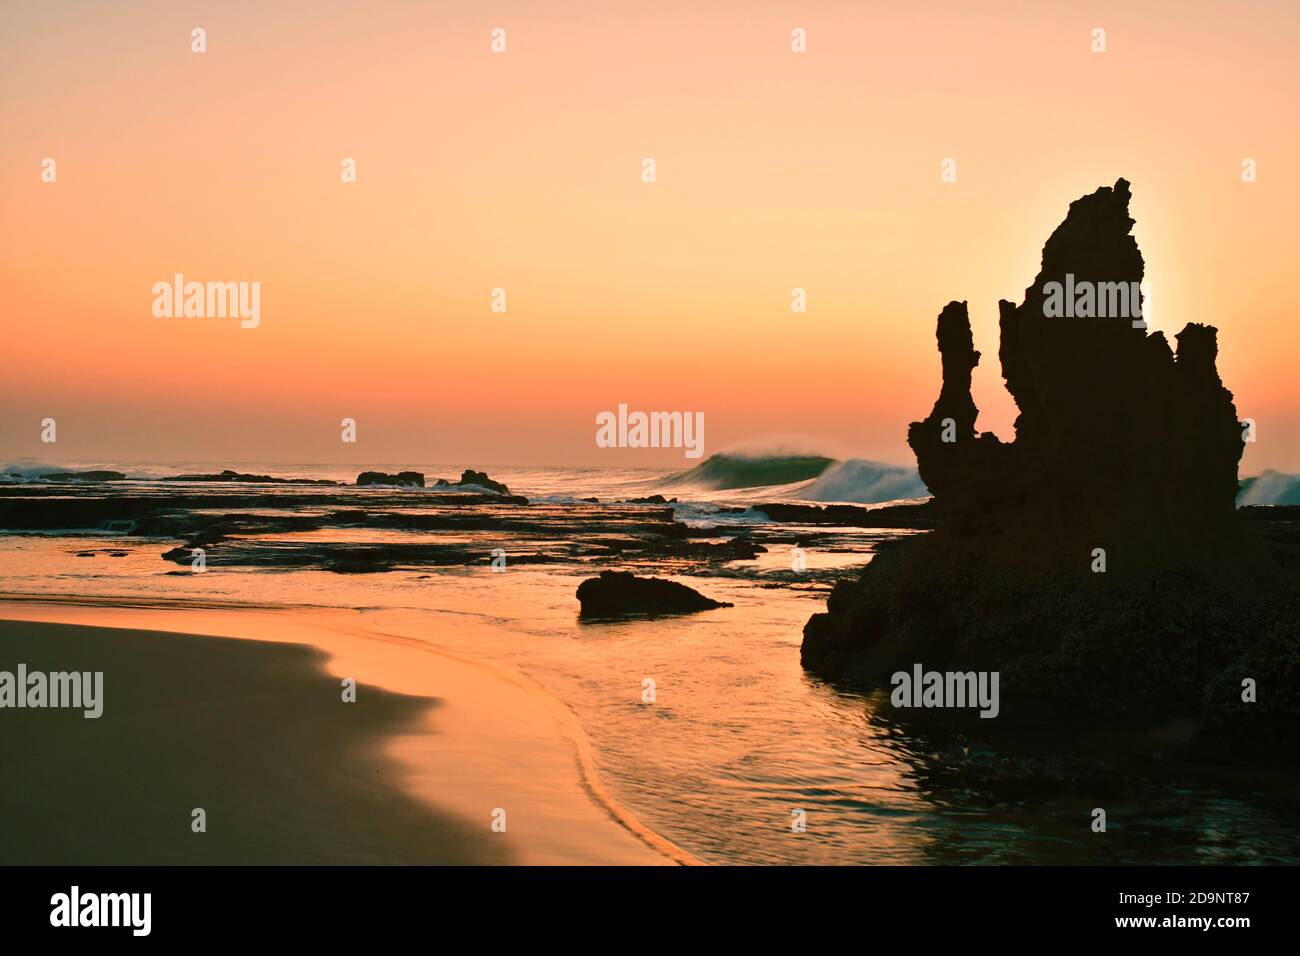 Beach at sunrise, rock formation, silhouette, Umhloti Beach, Durban, South Africa Stock Photo